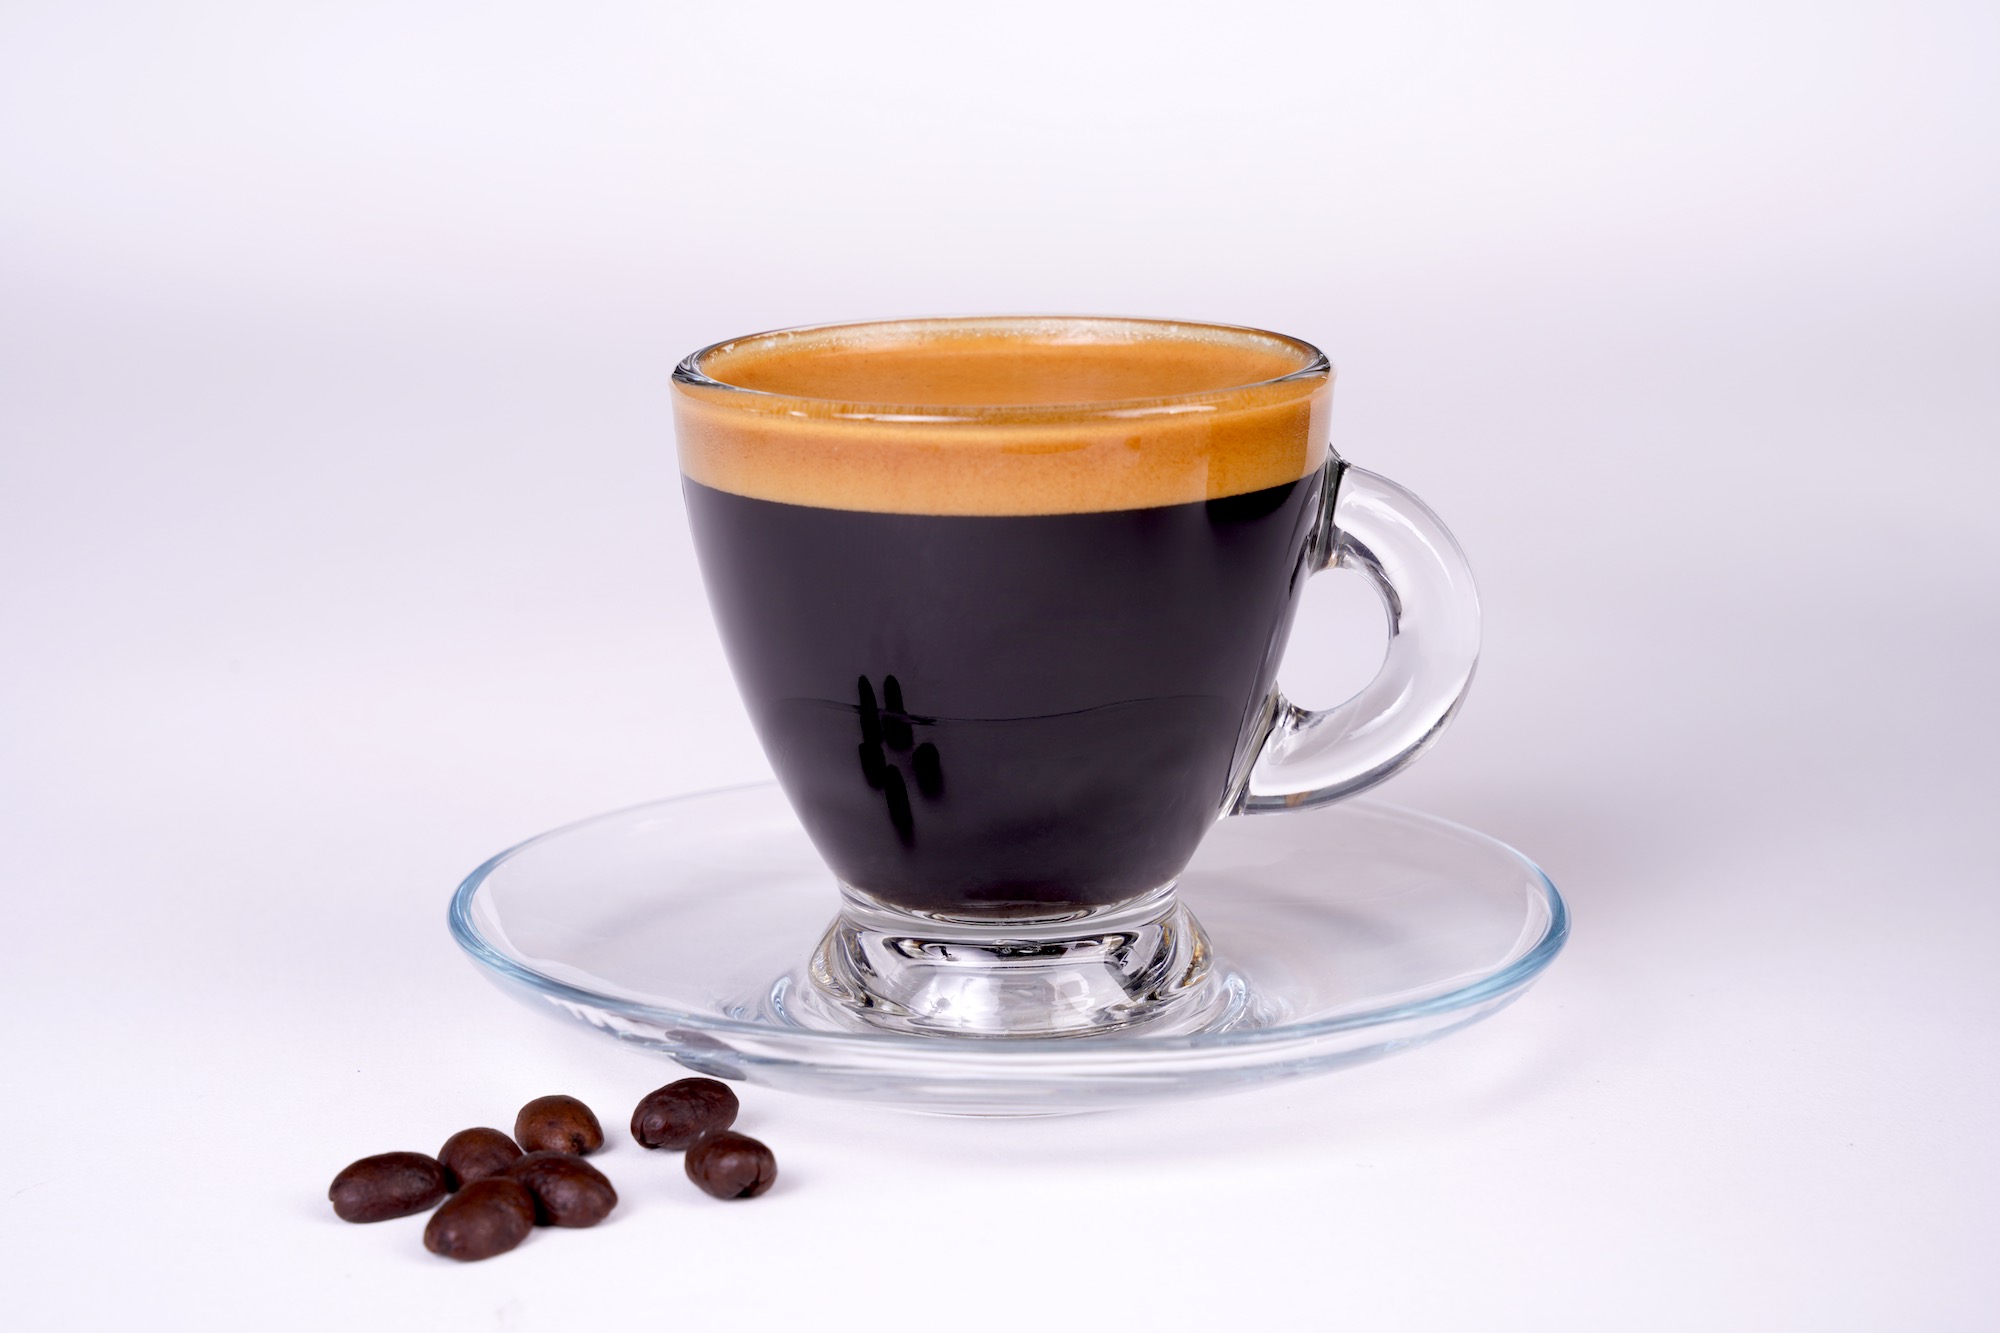 Decaf coffee: stop! It’s espresso crema time